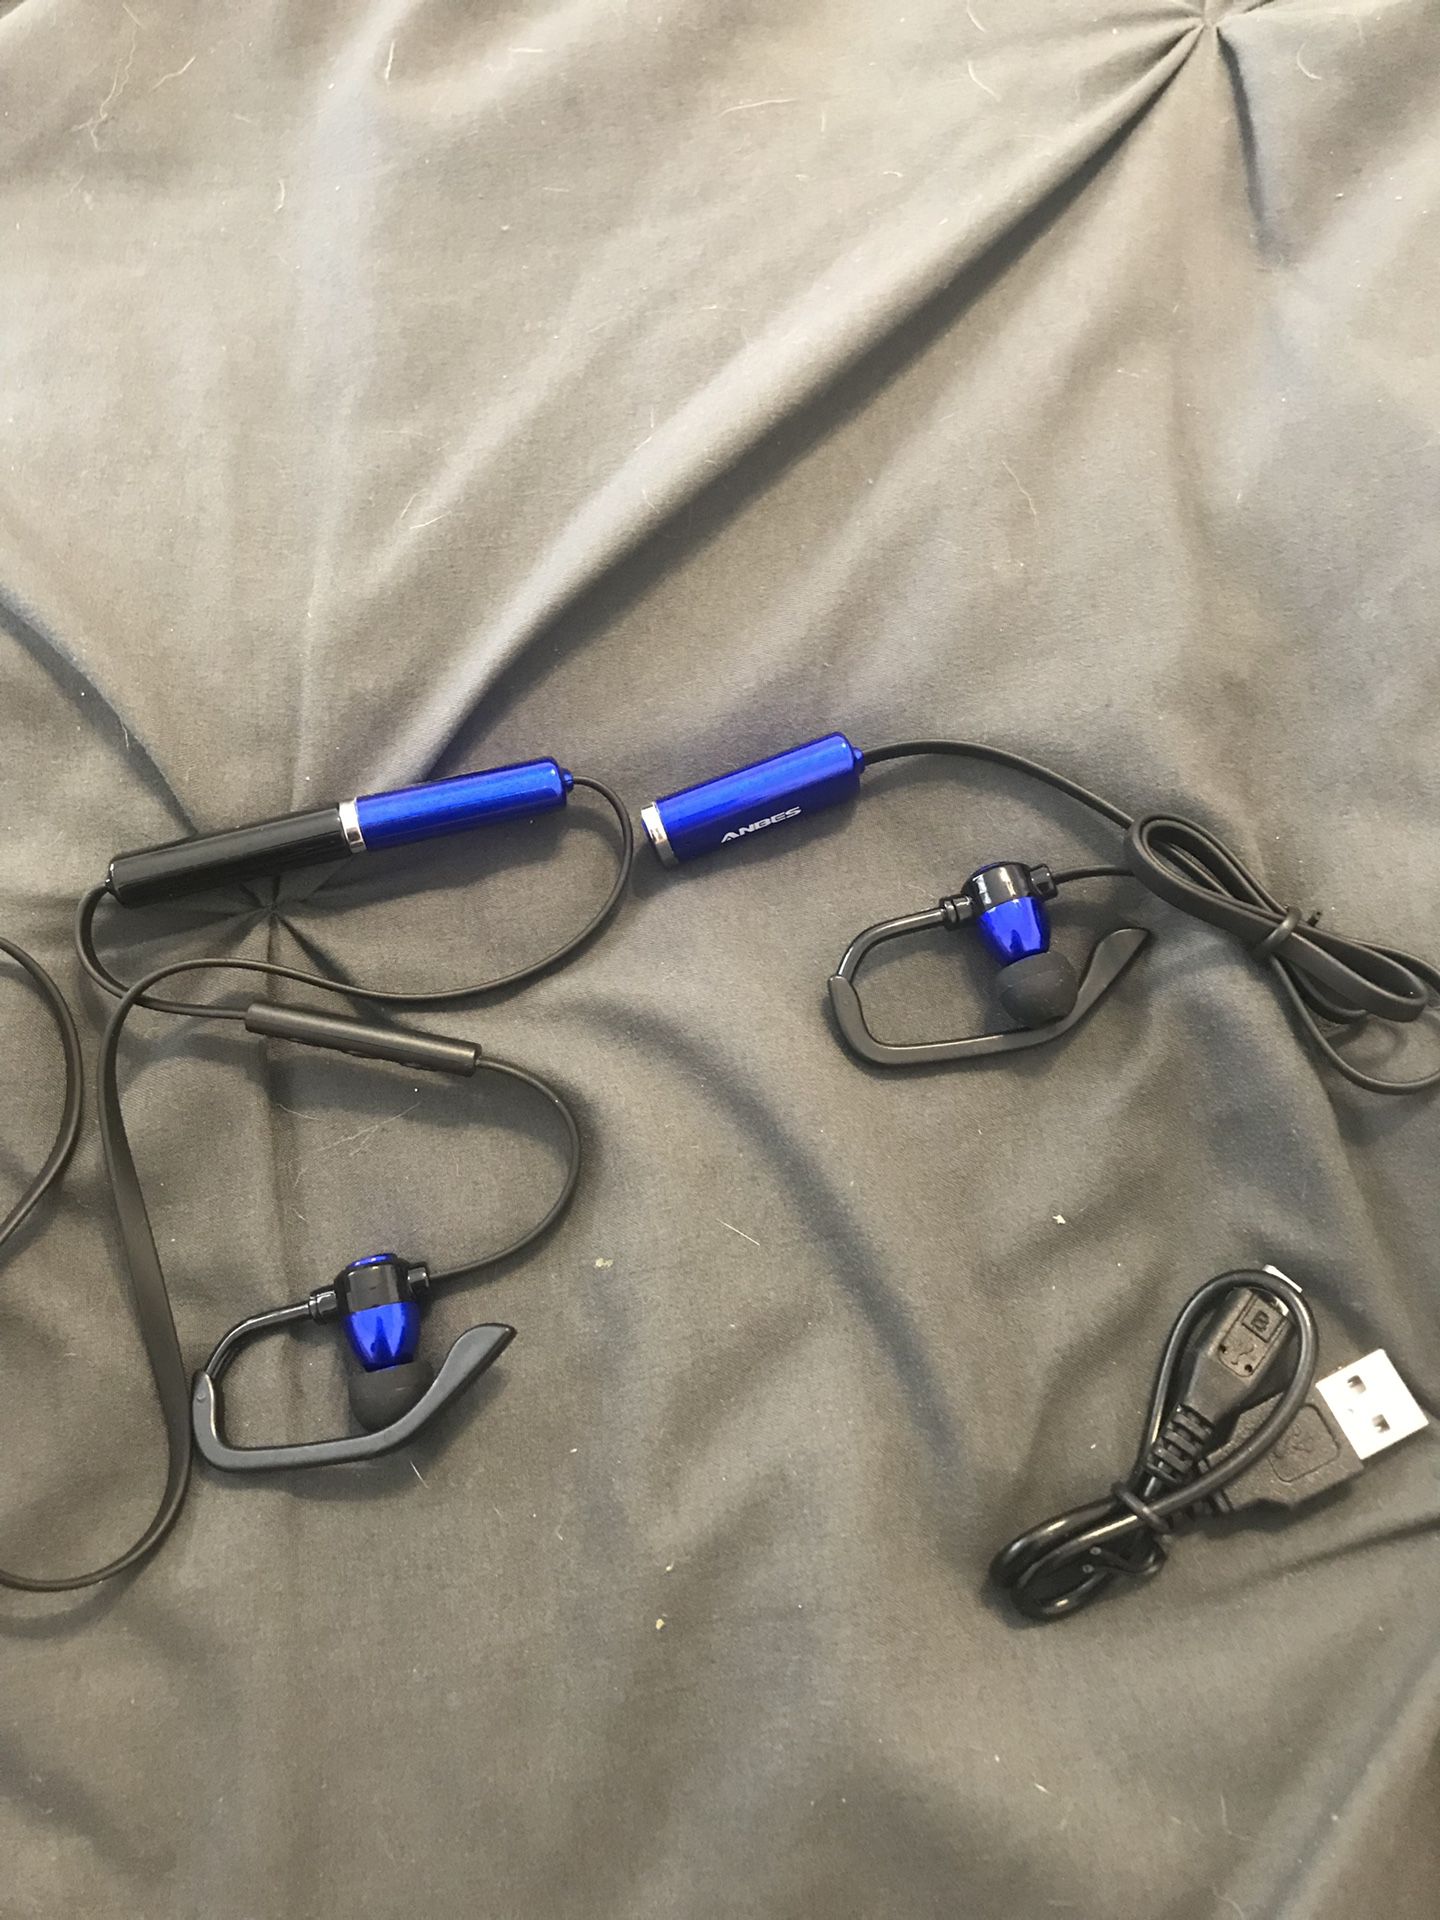 Bluetooth Headphones, Wireless Earbuds, Waterproof Sports Earphones with Ear Hooks & Mic, HD Stereo in-Ear Headphones Gym Running Workout, 8 Hours Ba